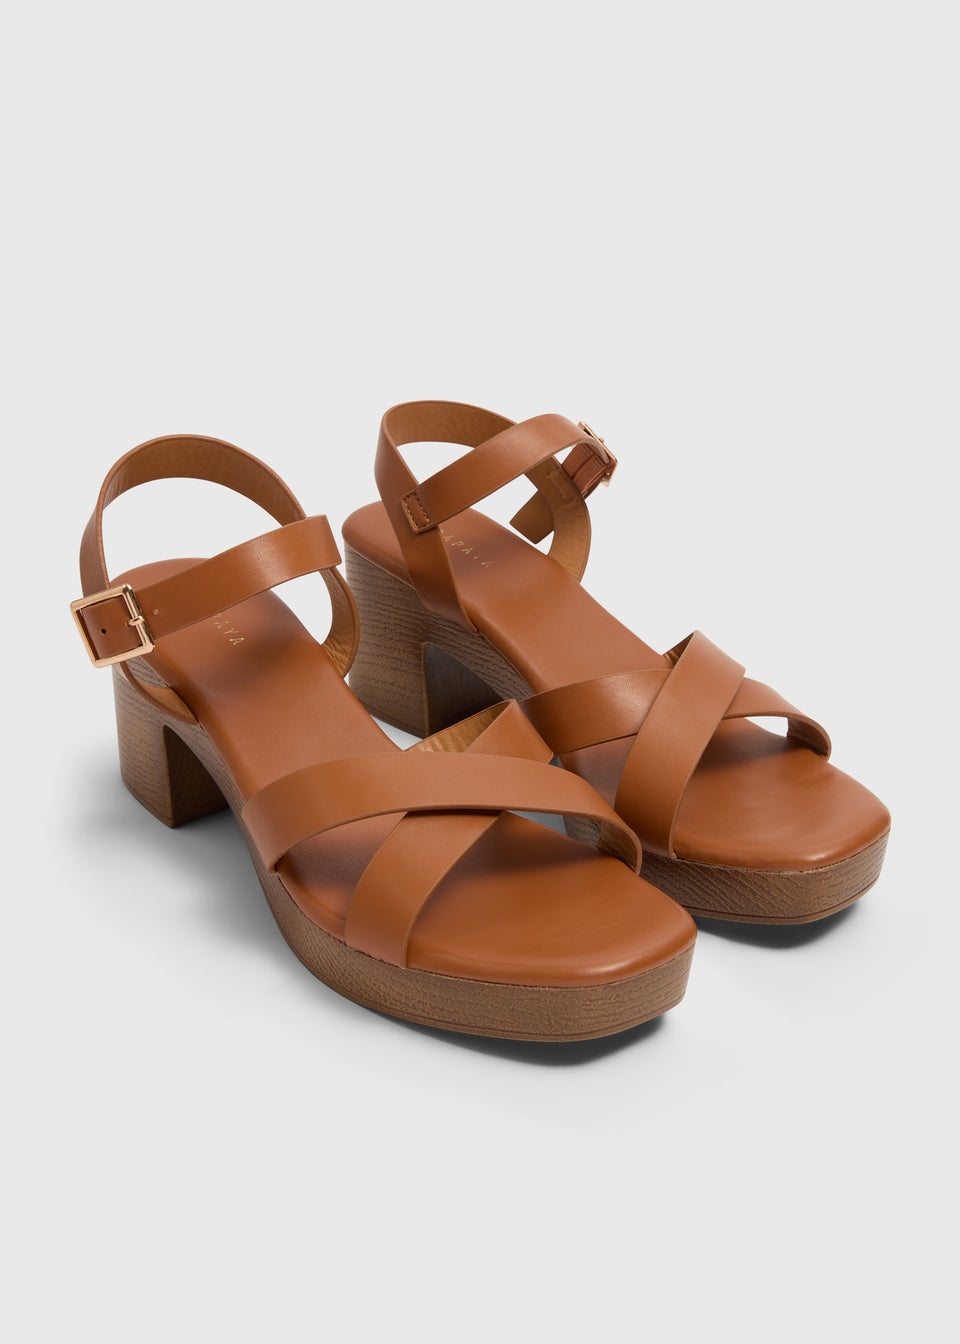 Tan Strappy Platform Sandals